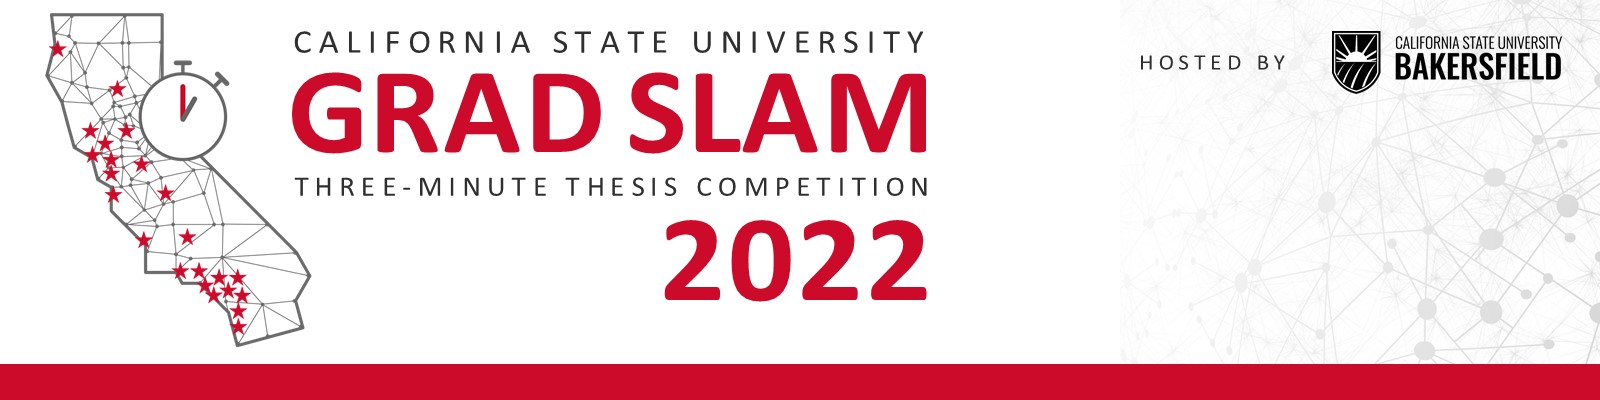 CSU Grad Slam 2022 banner